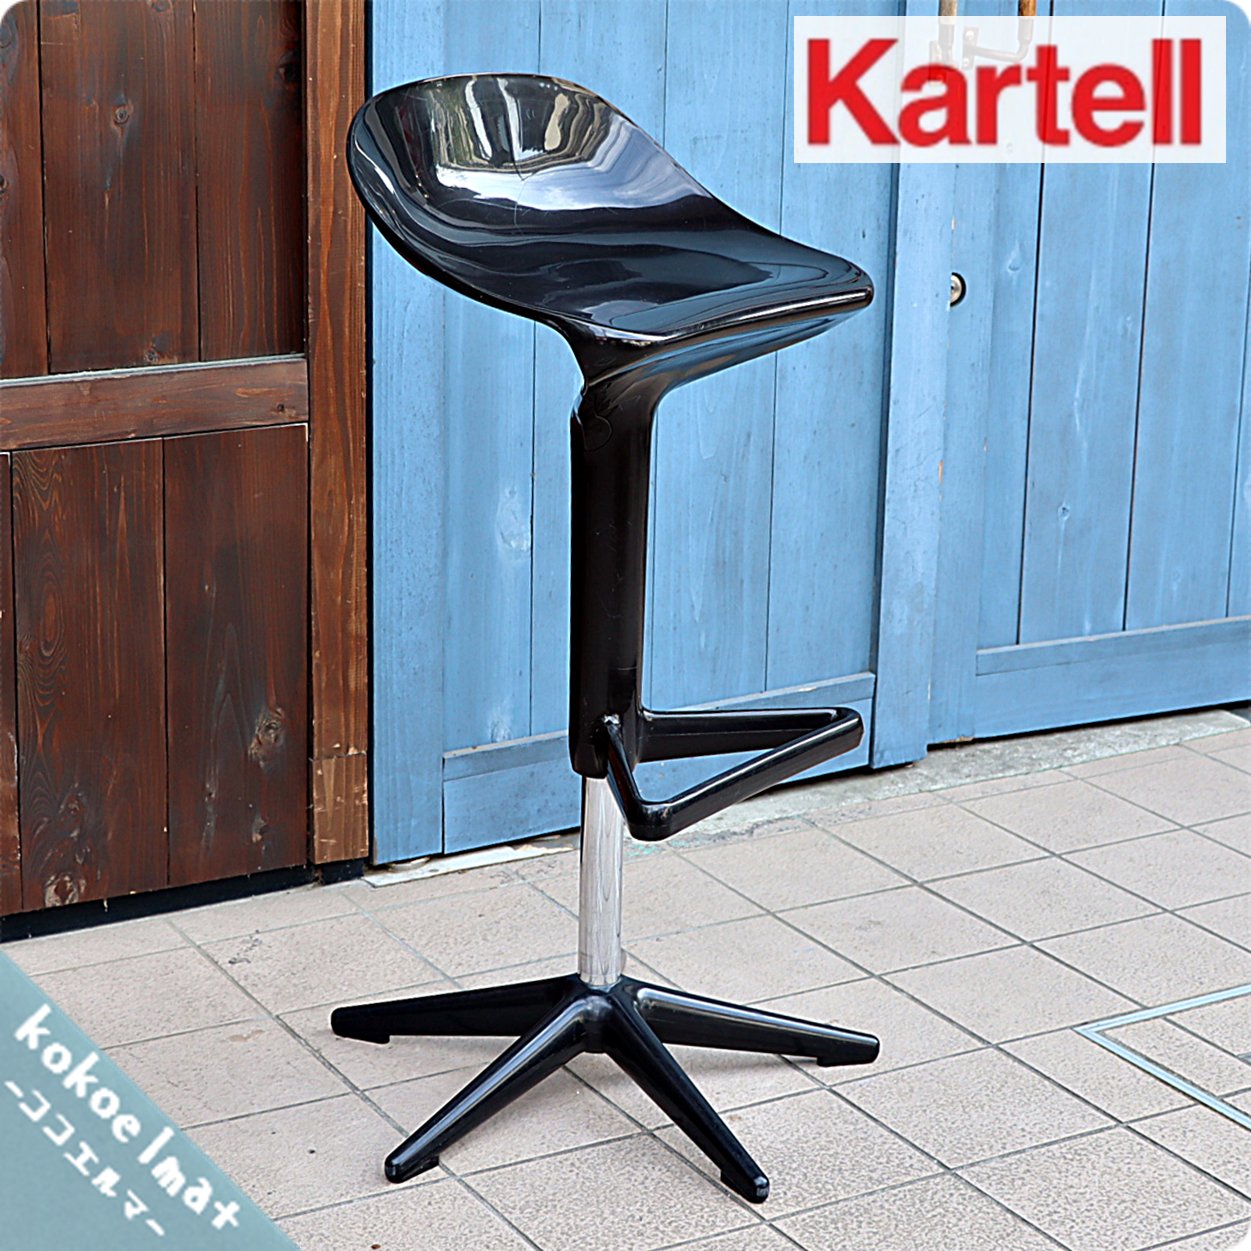 kartell カルテル スプーン カウンターチェア オシャレ カフェ 椅子